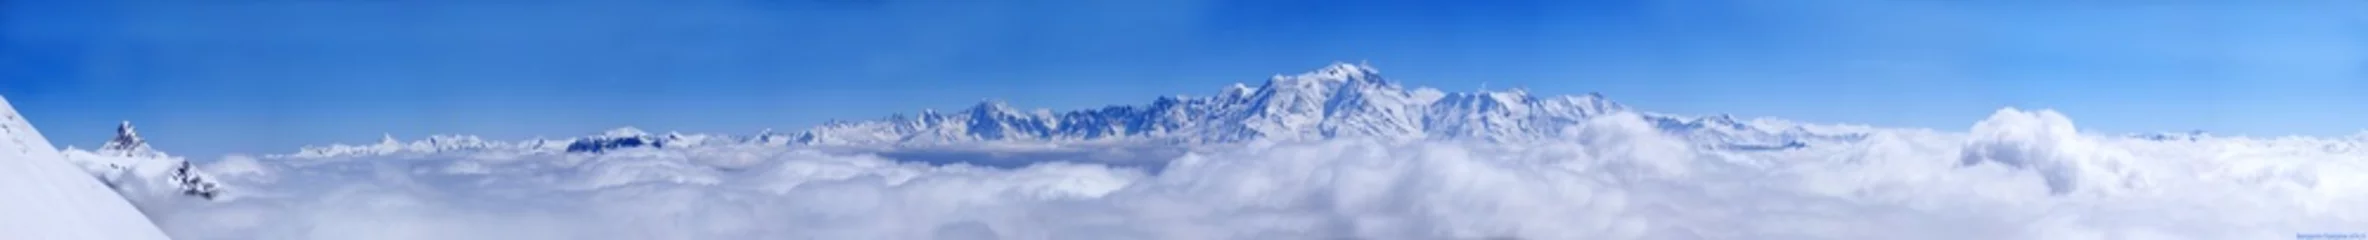 Fotobehang Mont Blanc mont blanc landschap